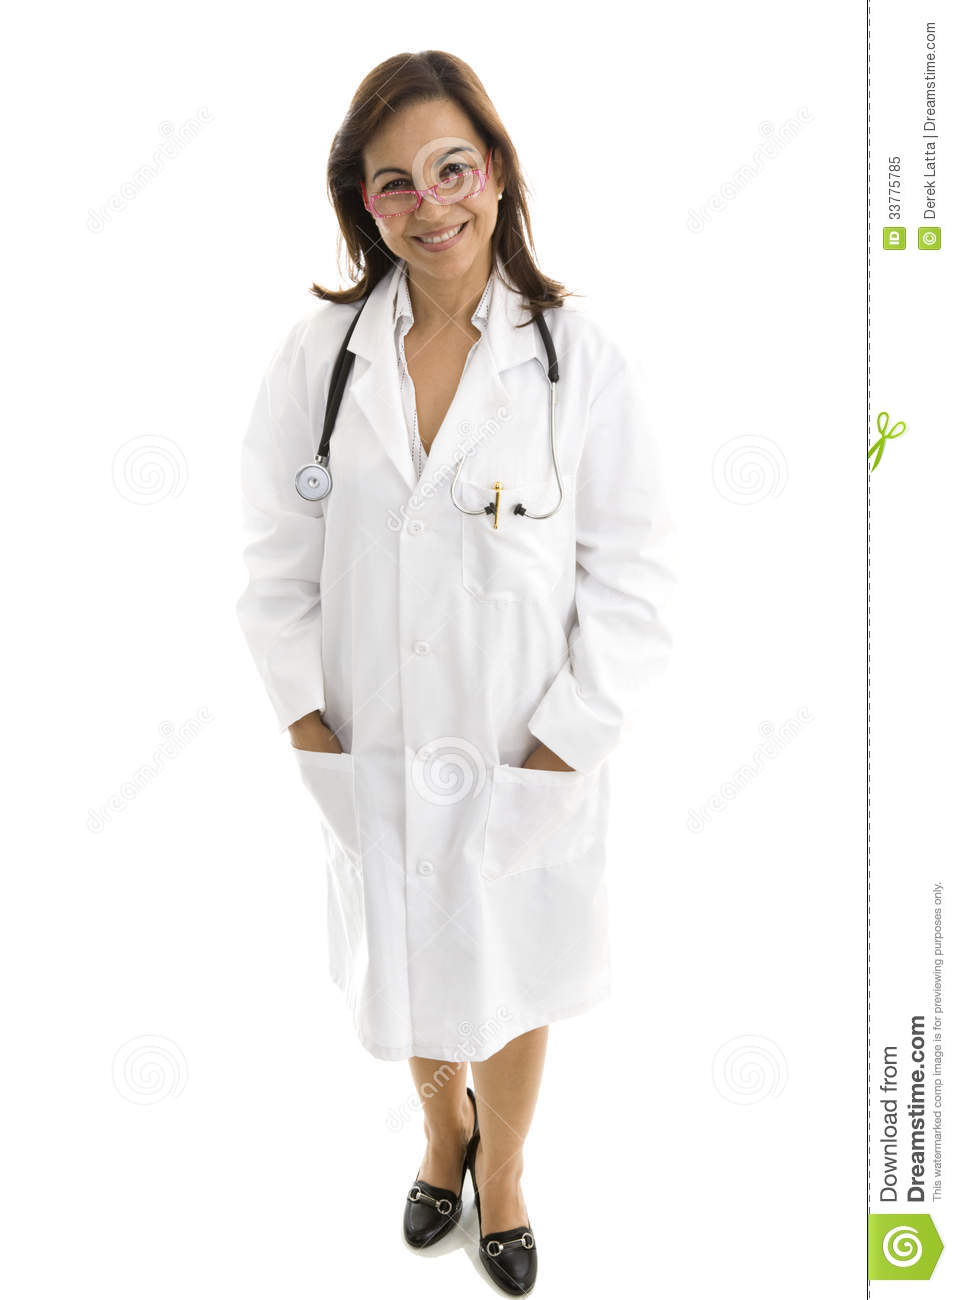 Portrait Of Female Doctor Royalty Free Stock Photo   Image  33775785